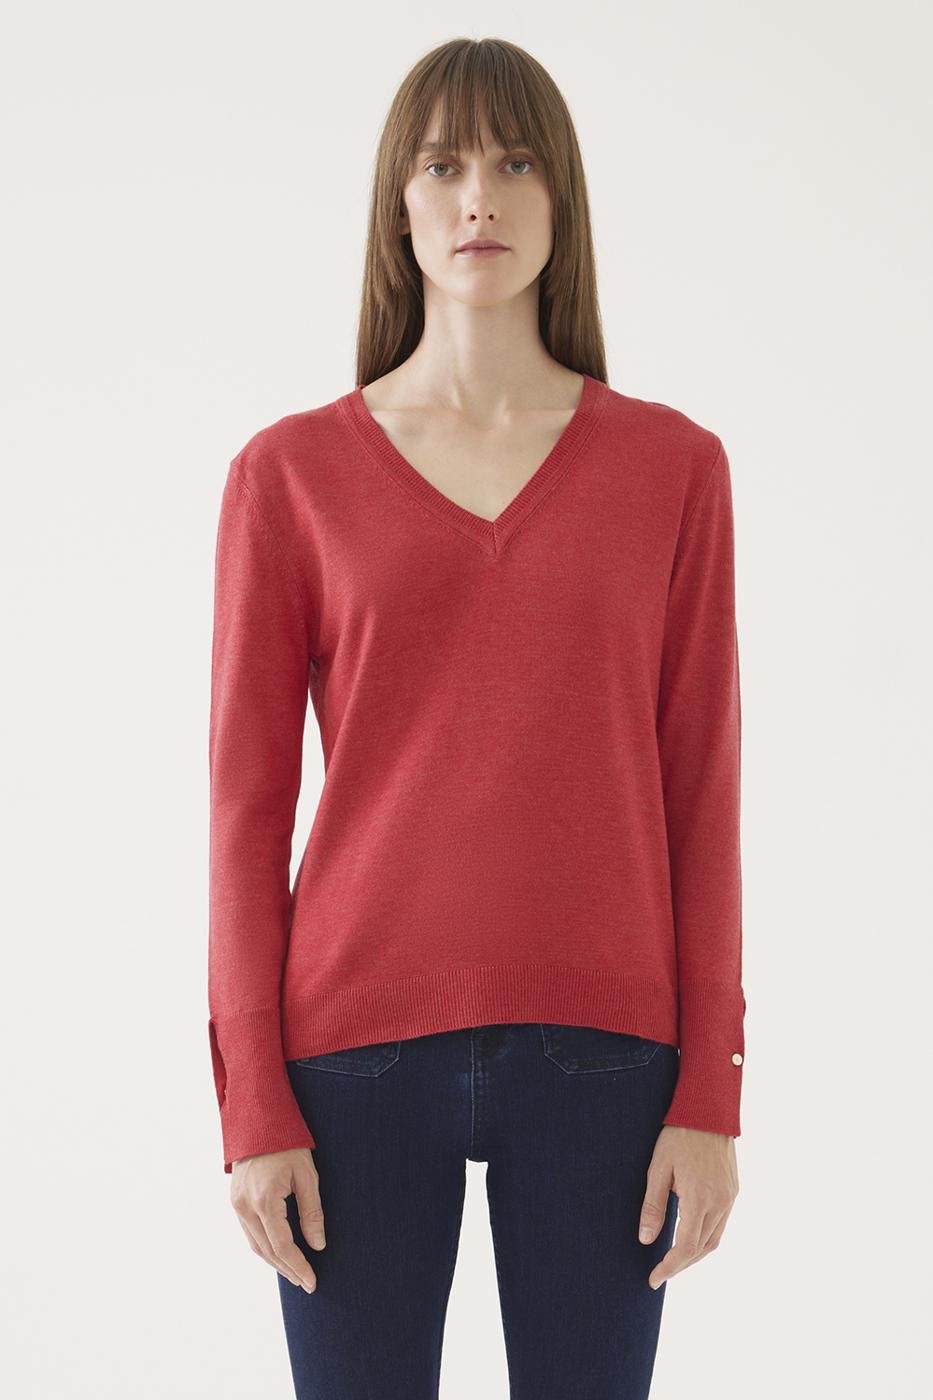 İllas Regular Fit Standart Boy V Yaka Kol Düğme Detaylı Kırmızı Renk Kadın Triko Bluz